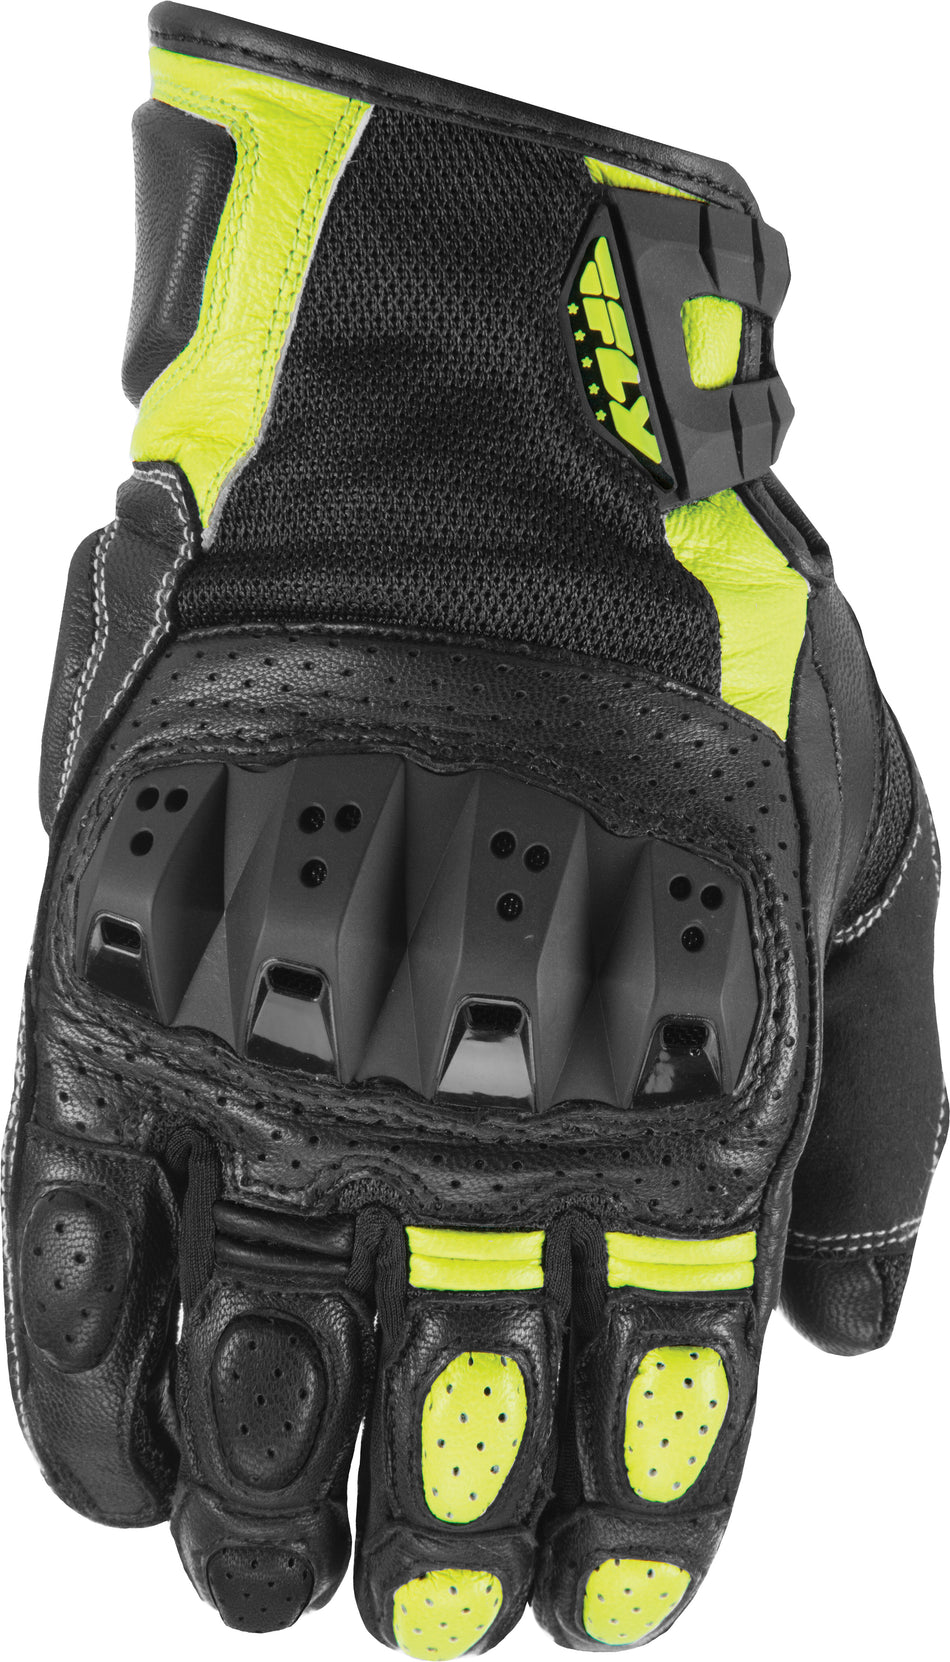 FLY RACING Brawler Gloves Black/Hi-Vis 3x #5884 476-2046~7